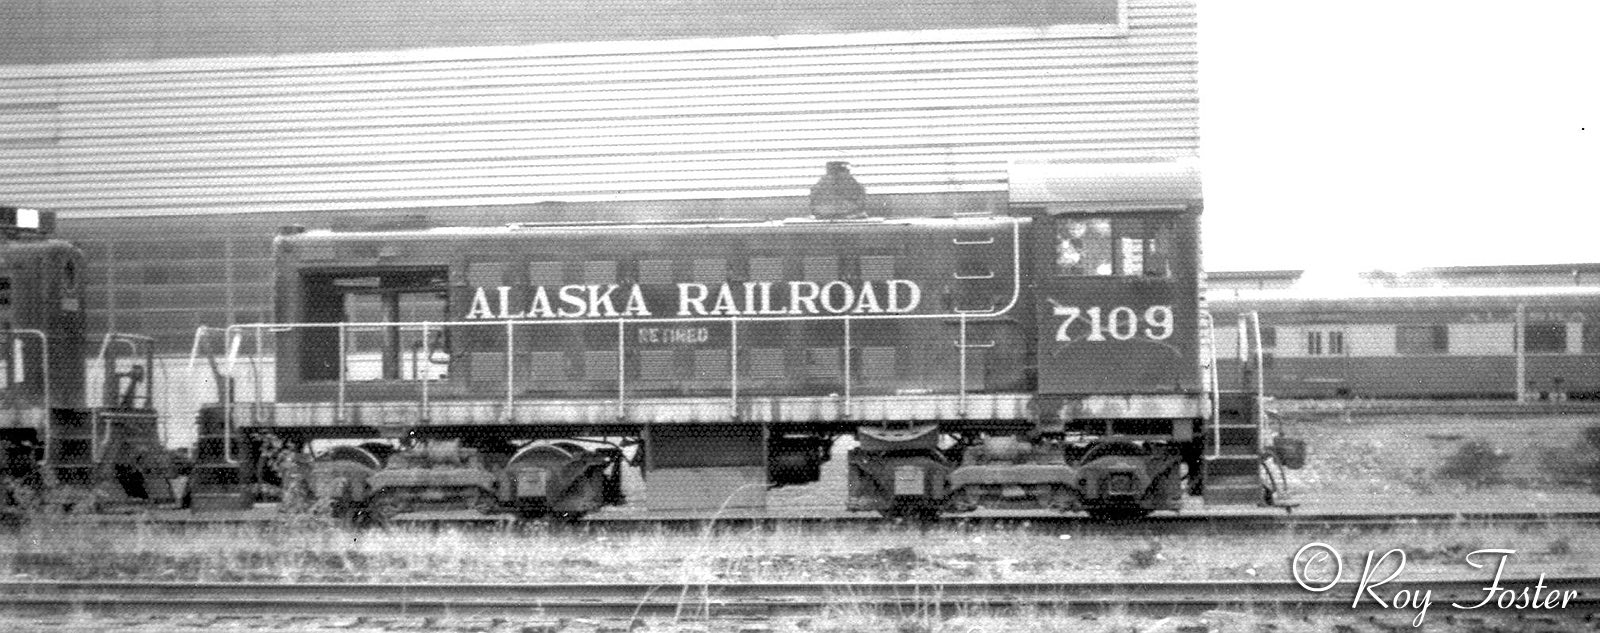 ARR 7109, Anchorage, 9-11-73